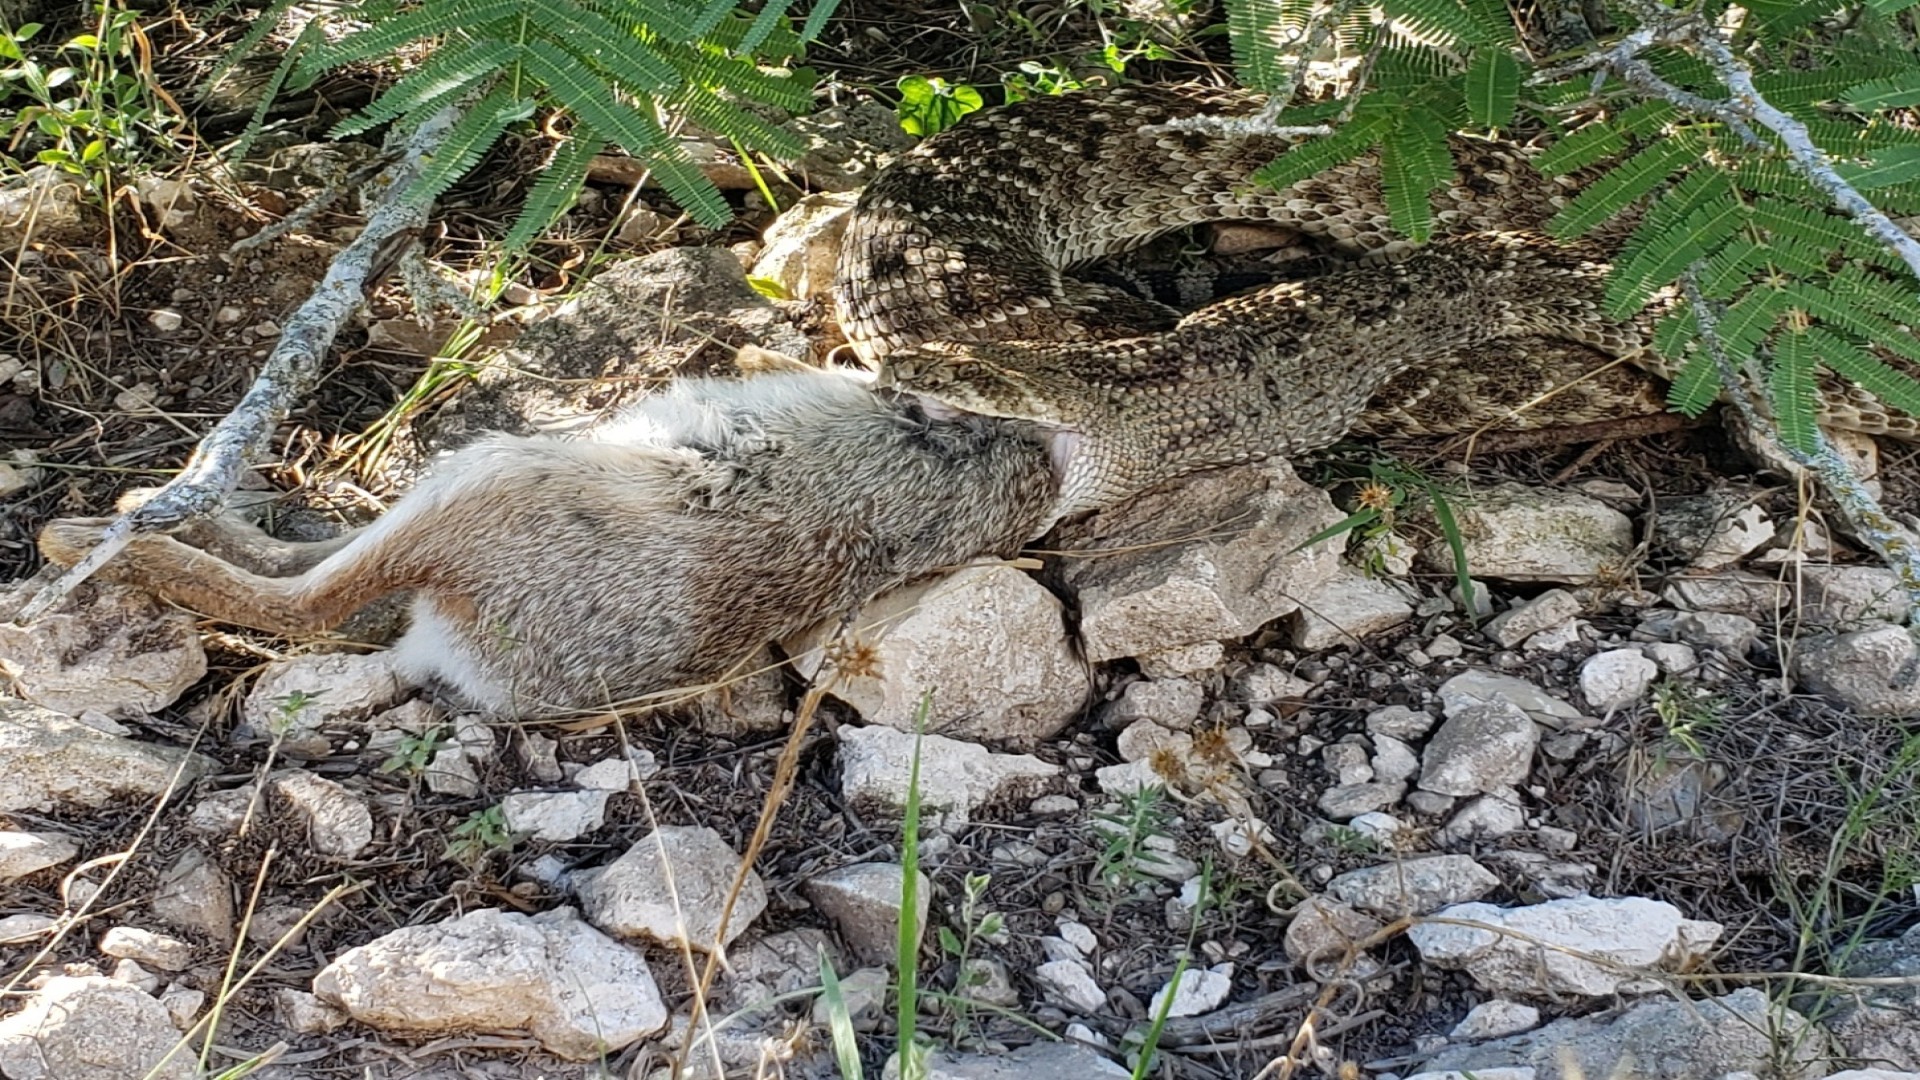 Video gives up close look at rattlesnake eating a rabbit near Uvalde